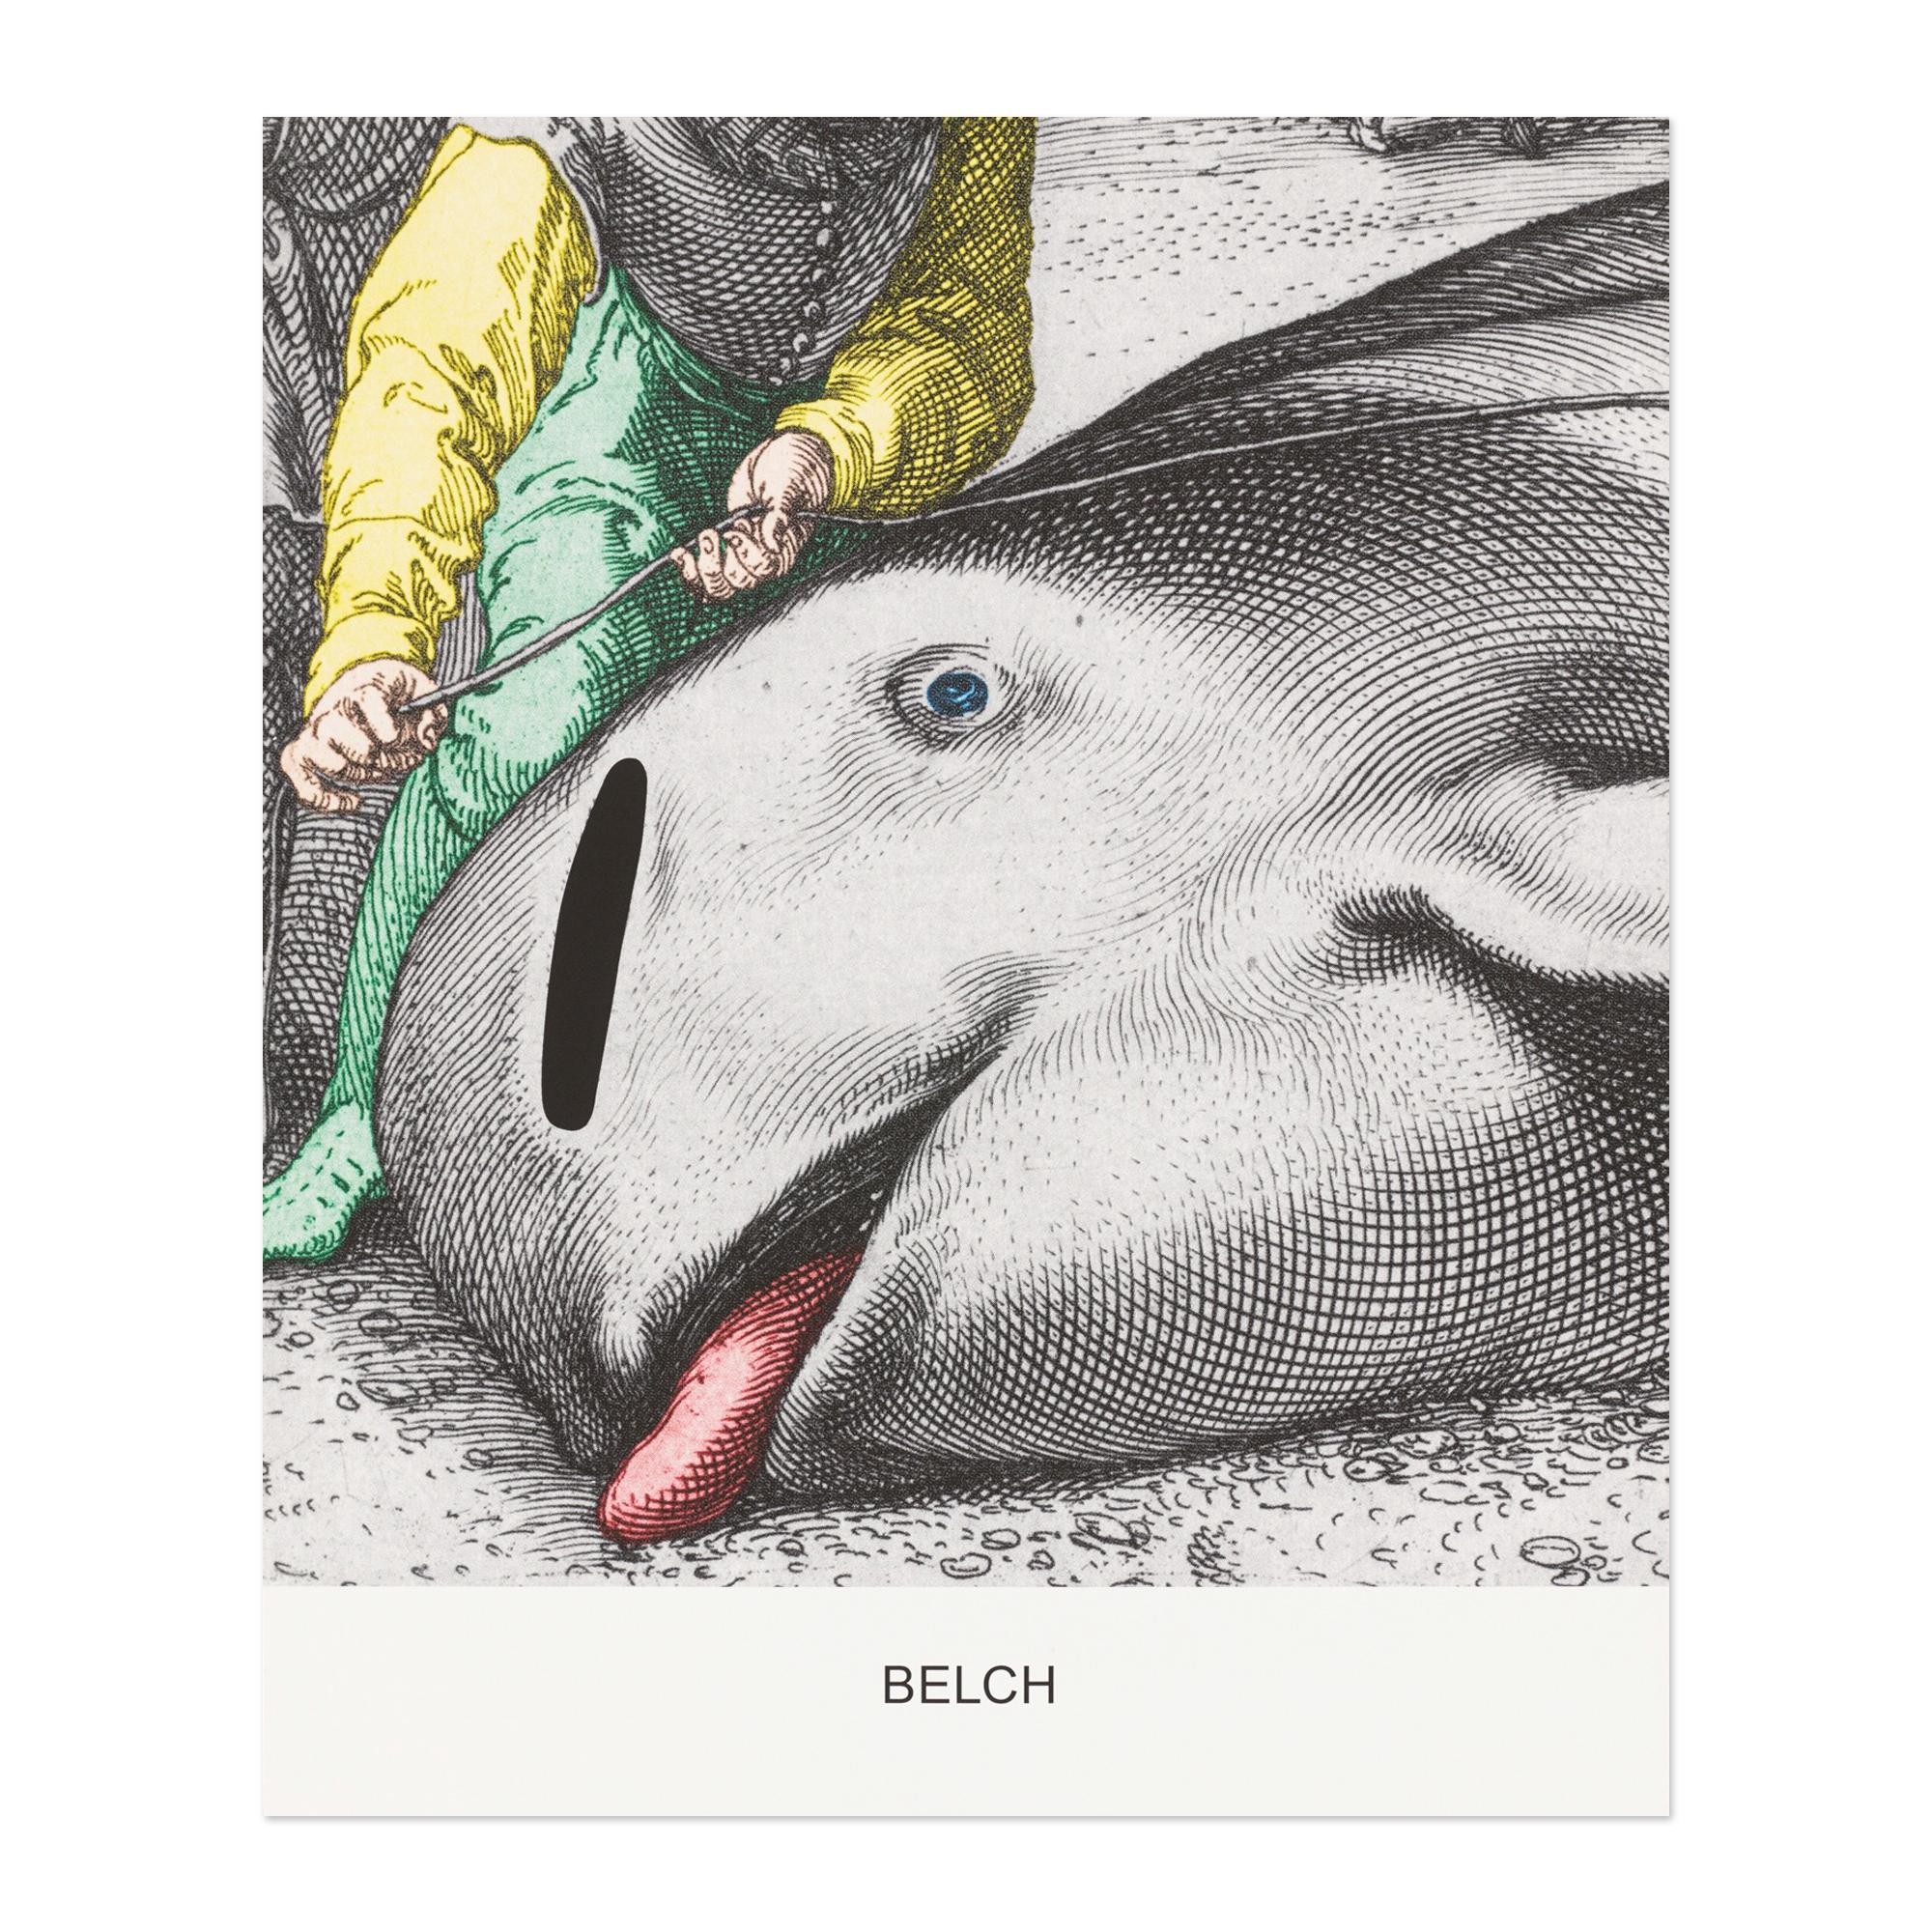 John Baldessari Figurative Print - Belch (from the Engraving with Sounds series), Conceptual Art, Pop Art